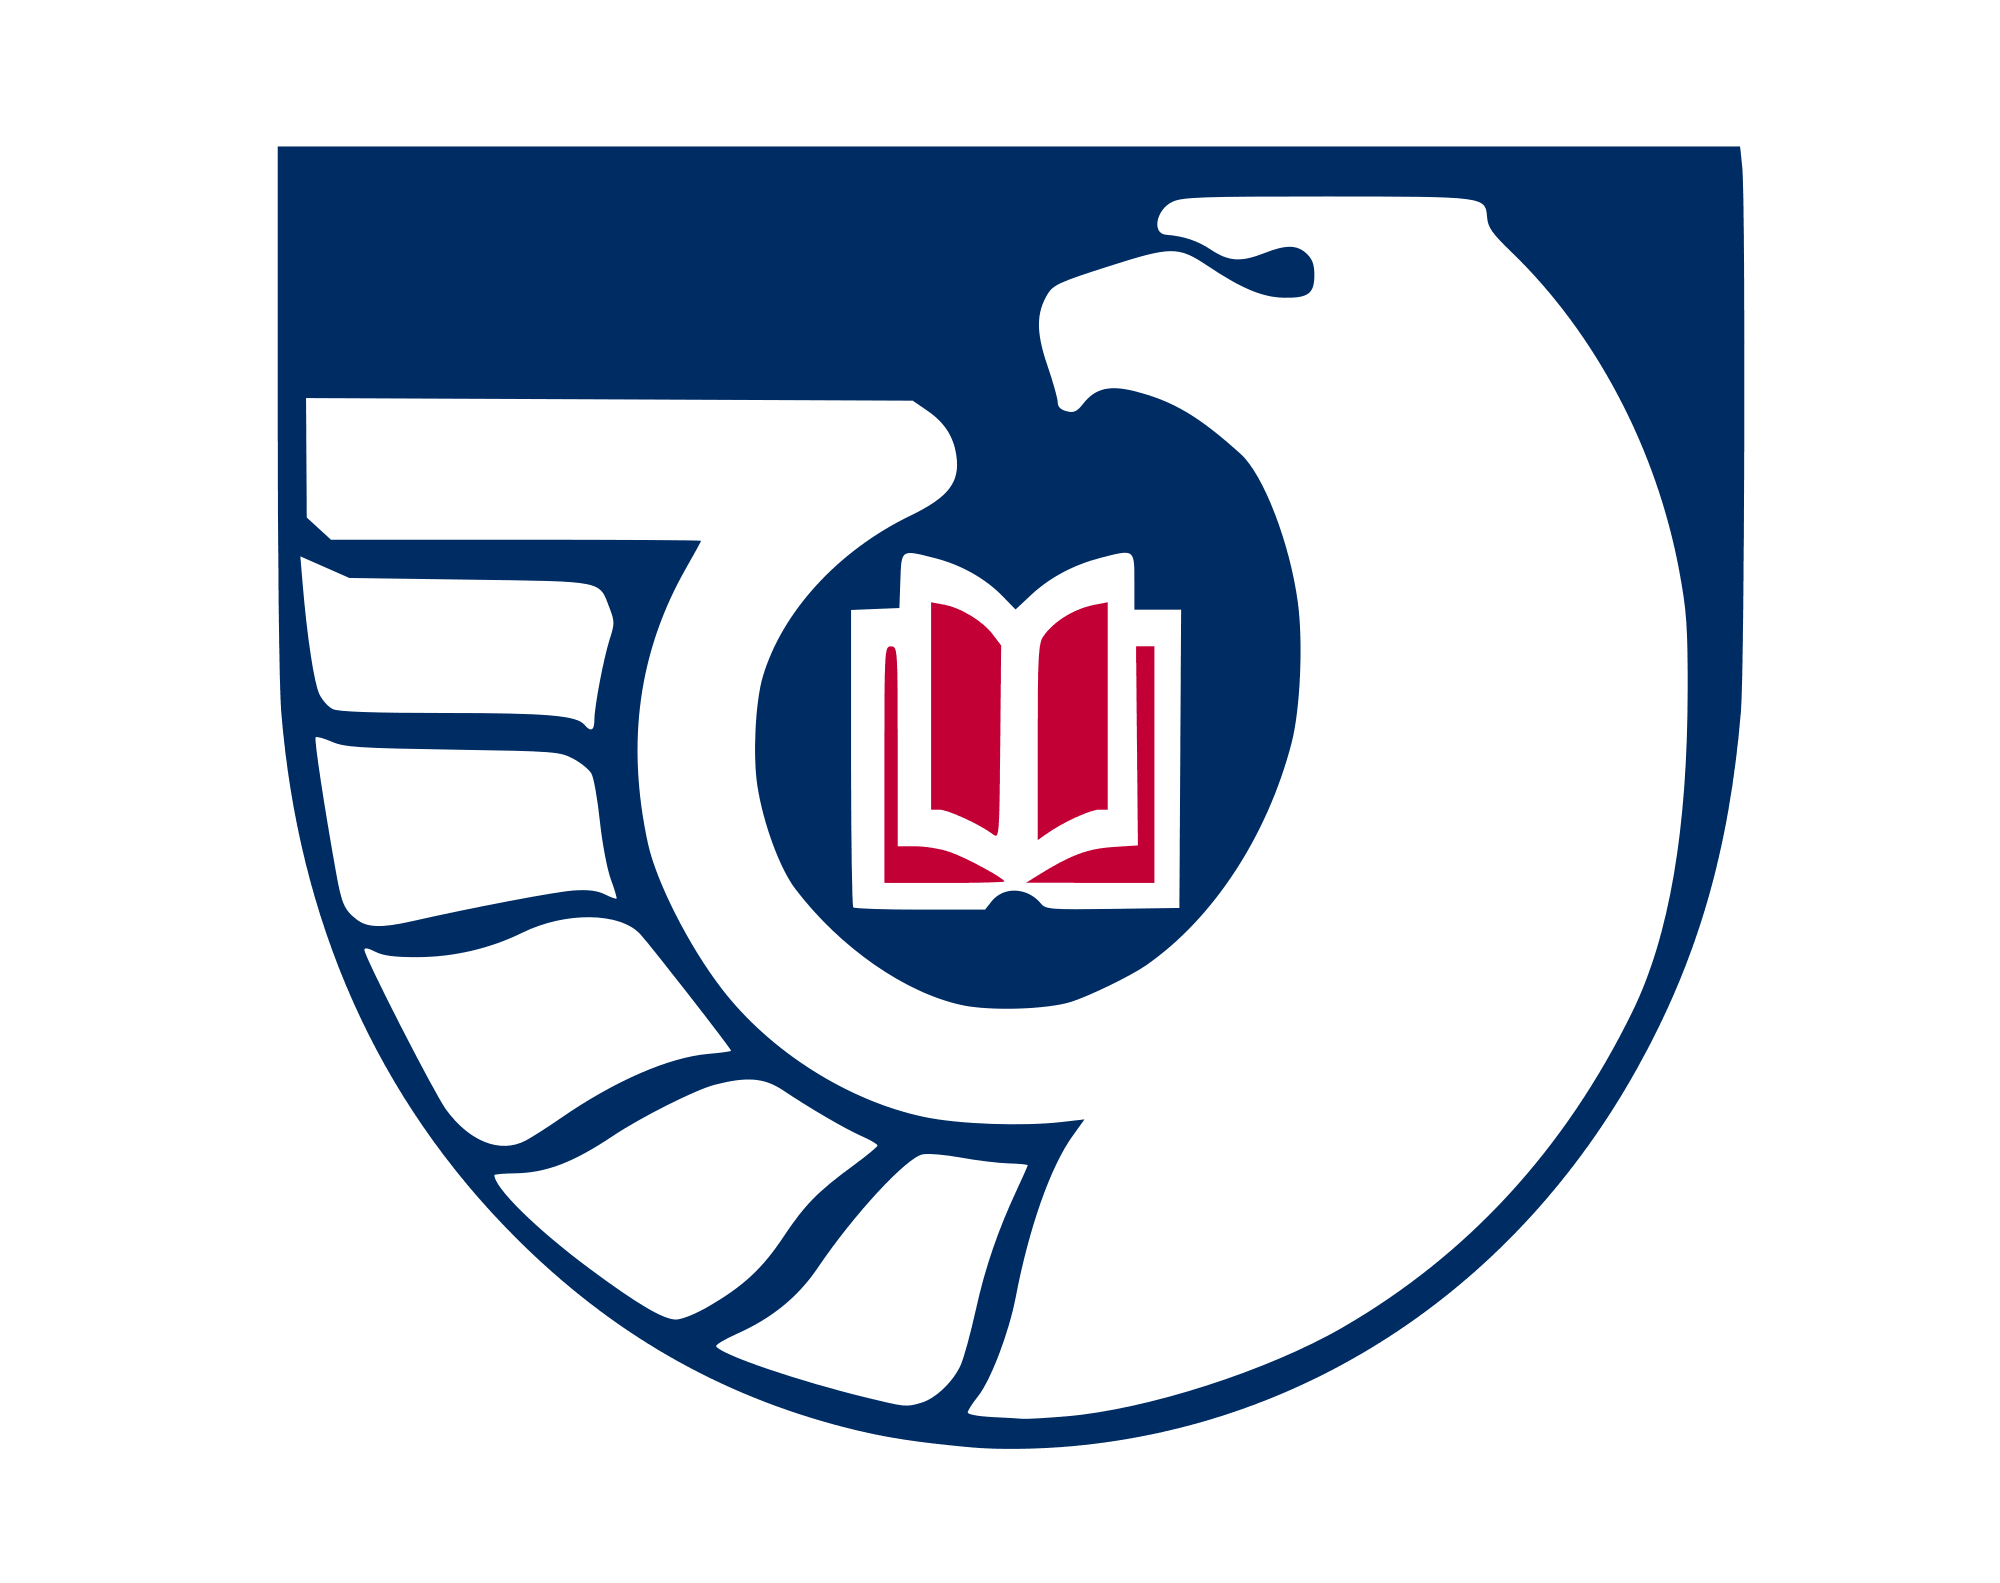 Federal Deposit Library logo